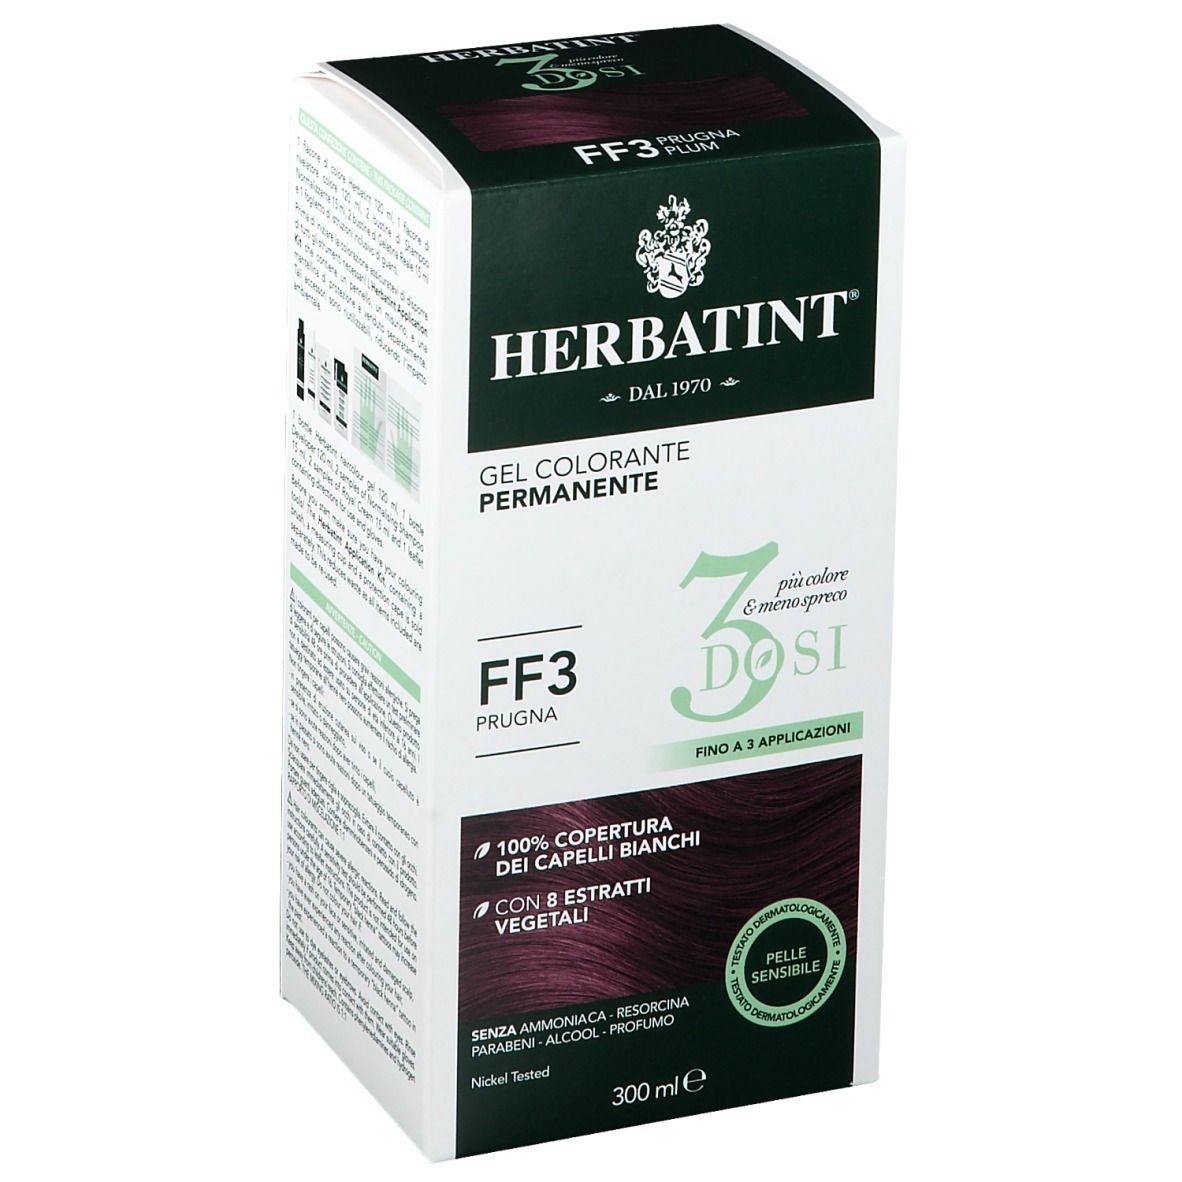 HERBATINT® 3 Dosi FF3 Prugna